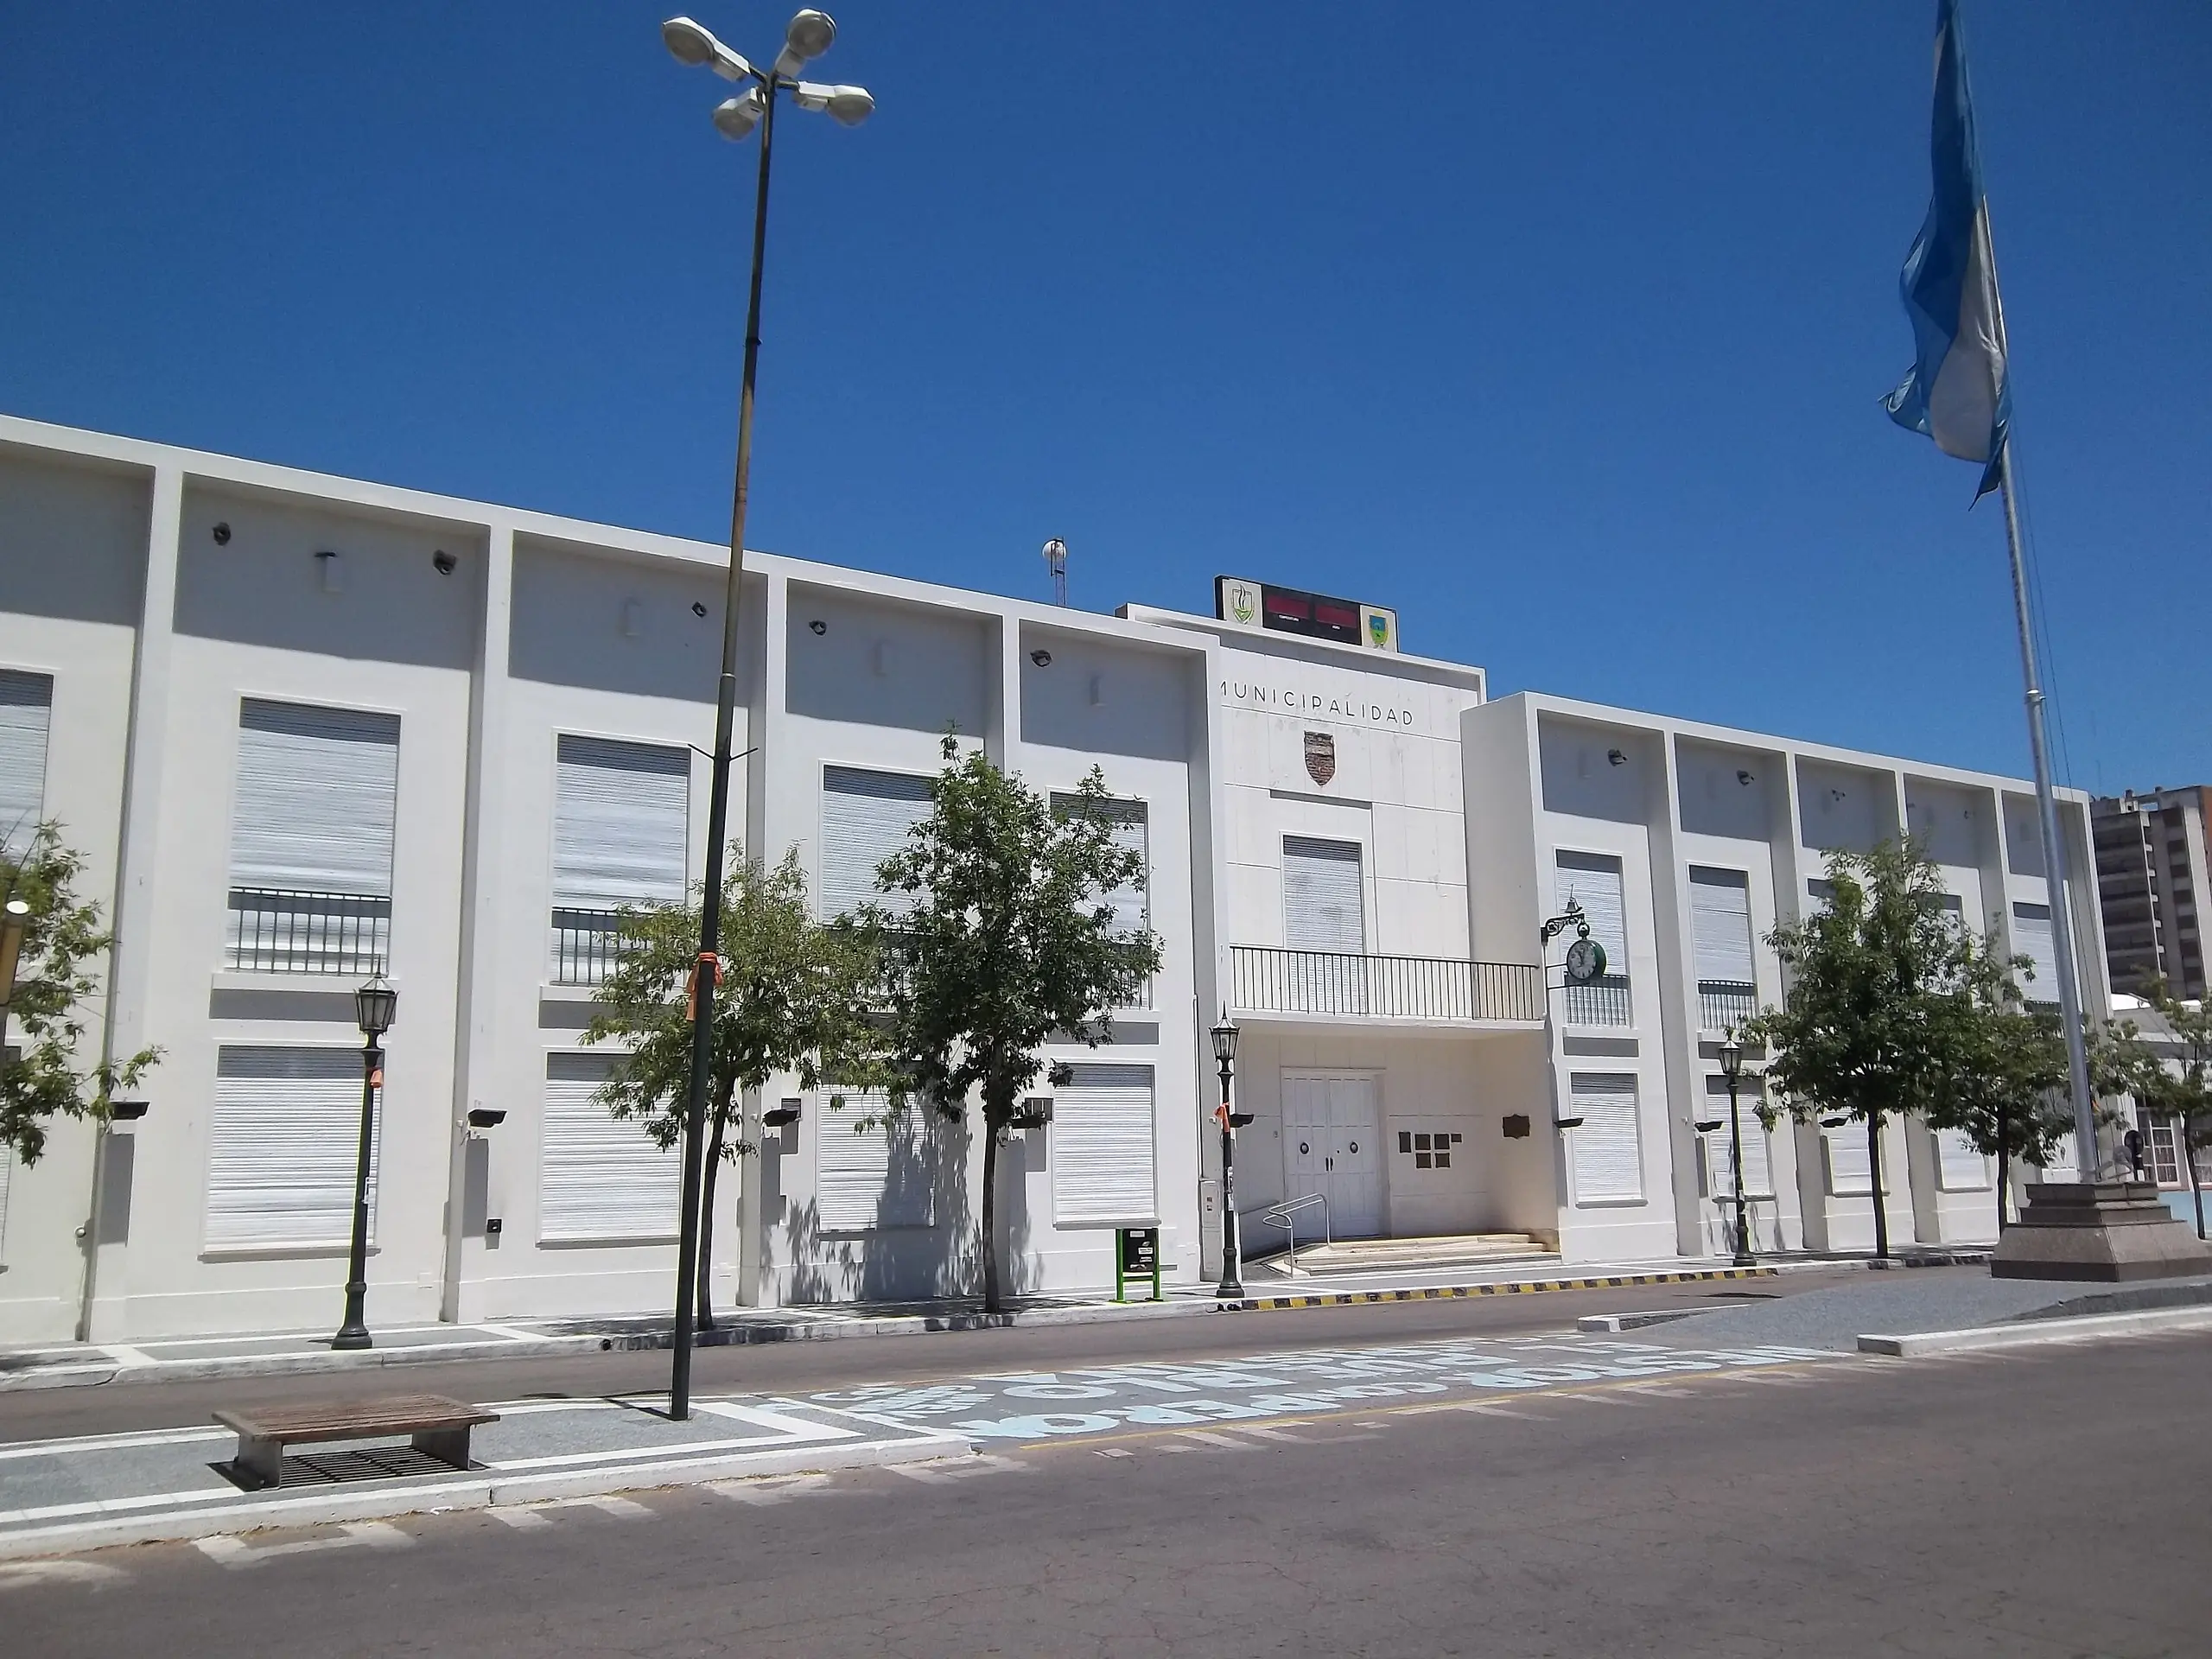 auditoria municipalidad santa rosa la pampa - Cómo pagar impuestos municipales Santa Rosa La Pampa